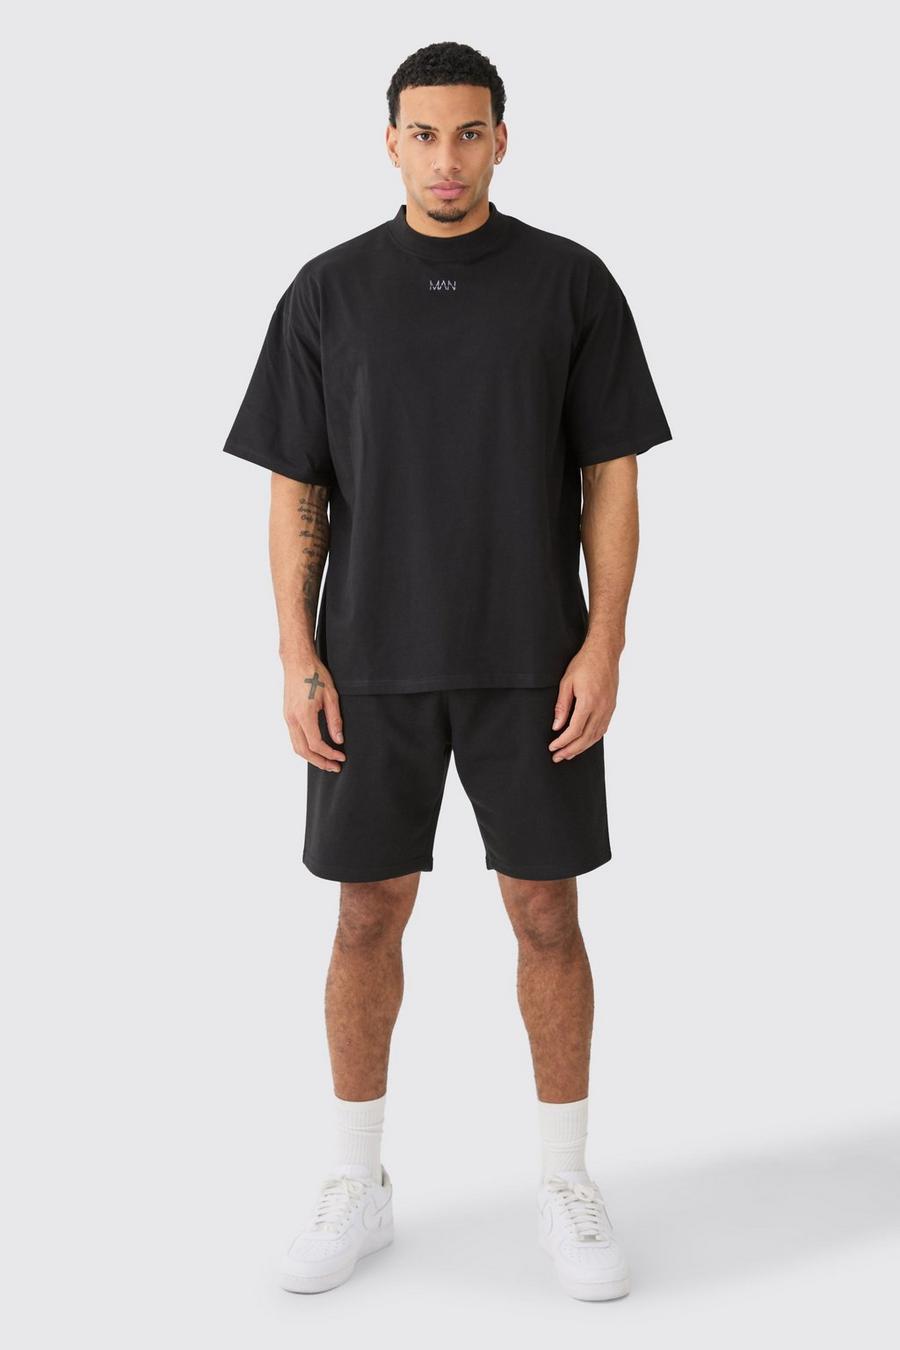 Oversize Man T-Shirt & lockere Shorts, Black